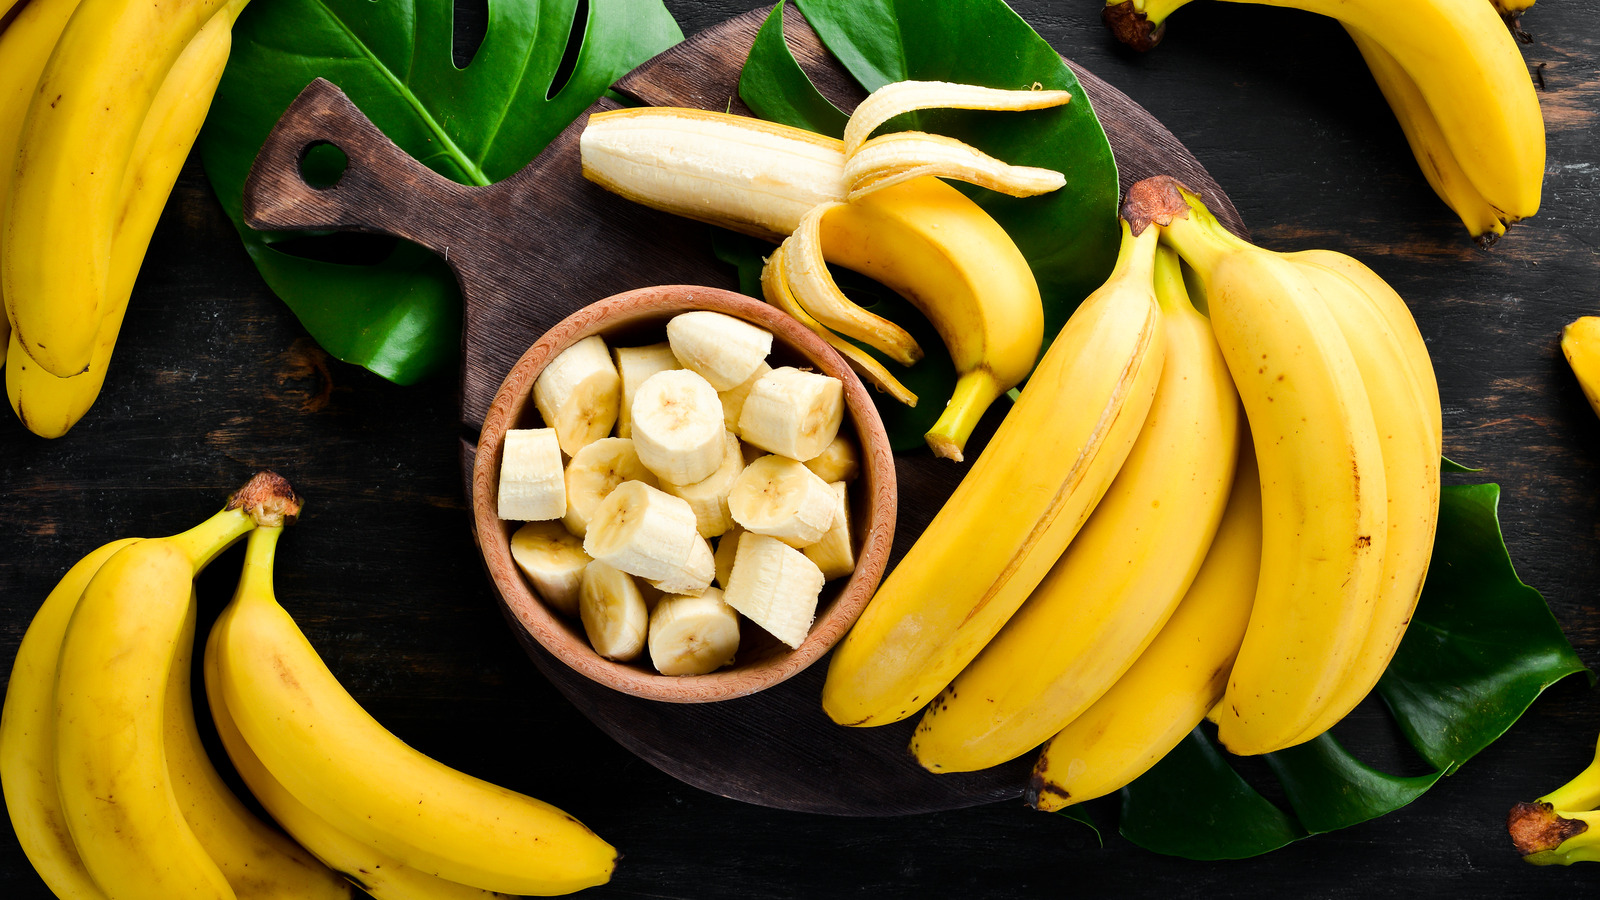 “Bananas: The Versatile Powerhouse Fruit for a Healthy Mediterranean Diet”